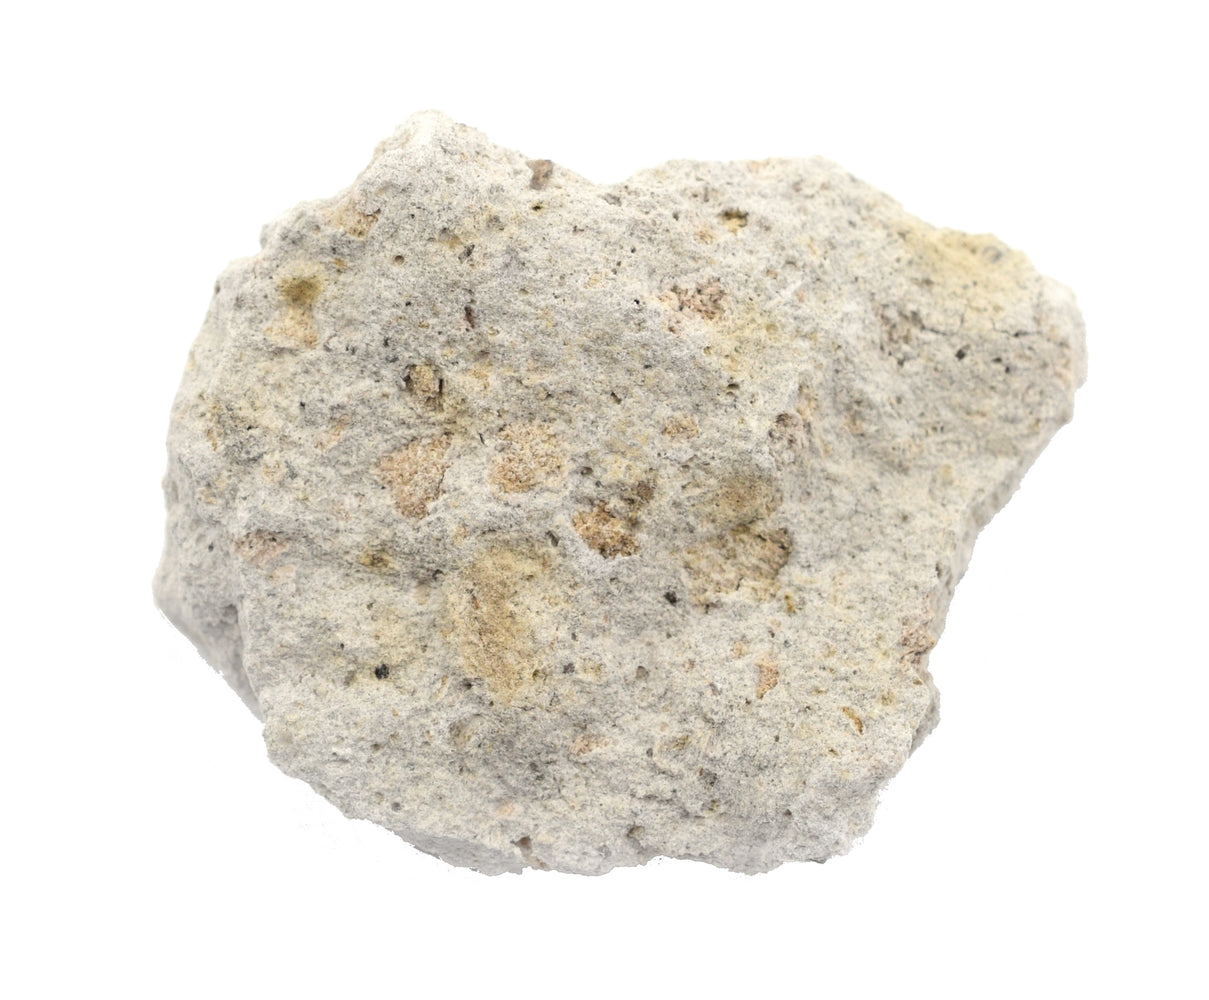 Raw Pumice Igneous Rock Specimen, 3 - Hand Sample Samples - Eisco